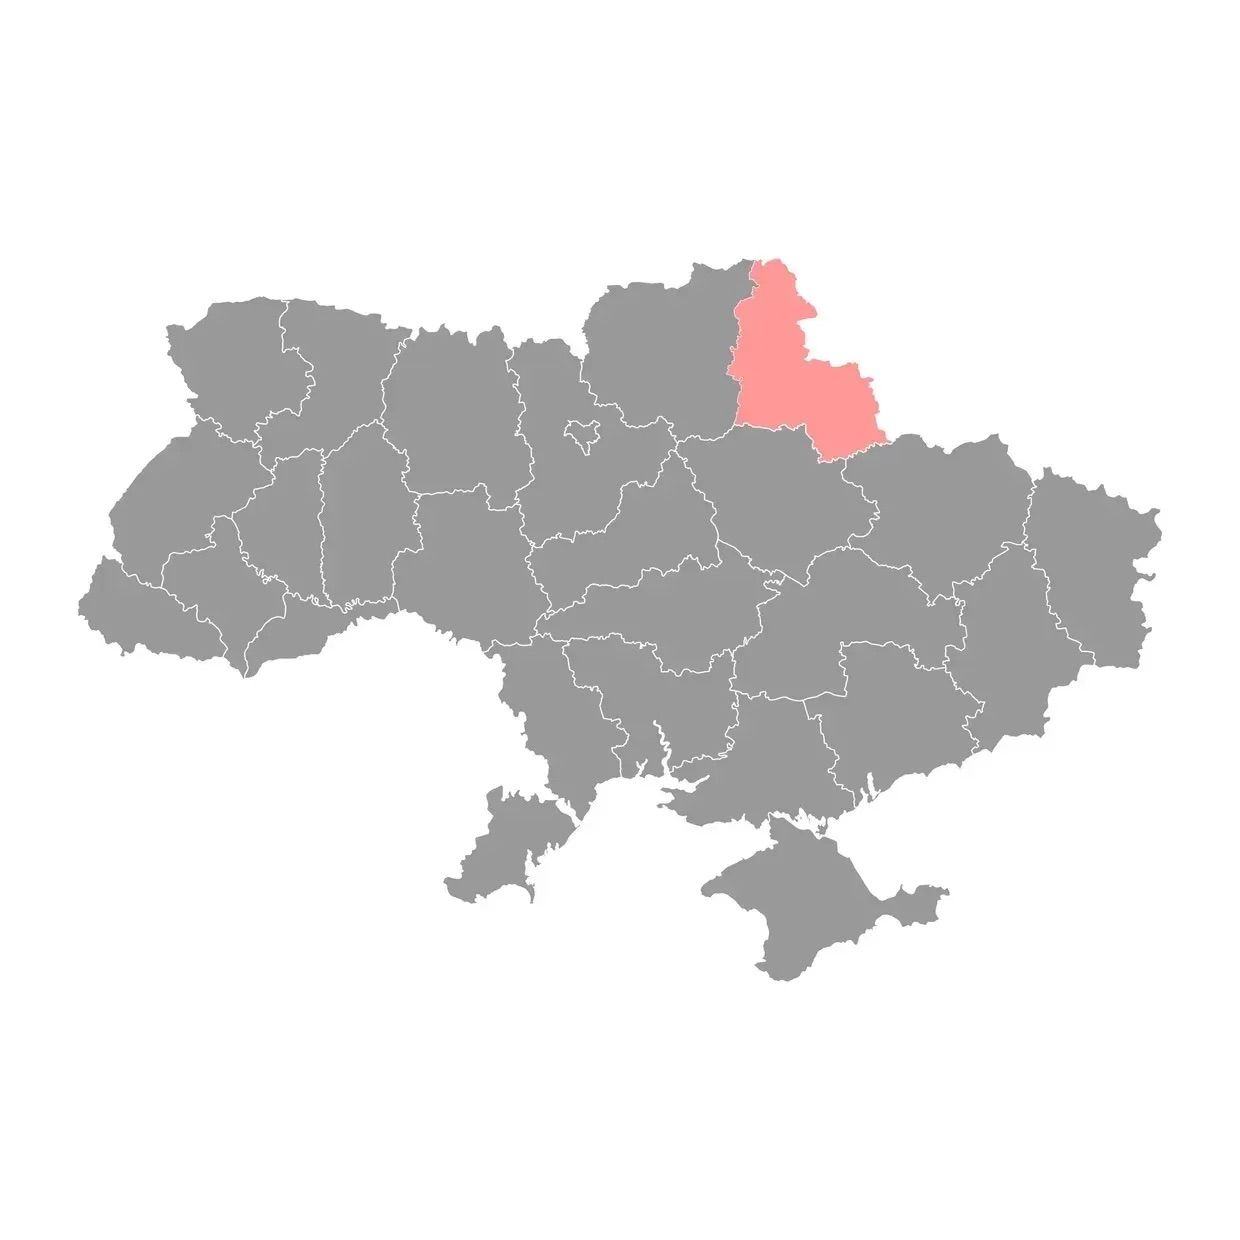 Russia attacks 4 communities in Sumy Oblast